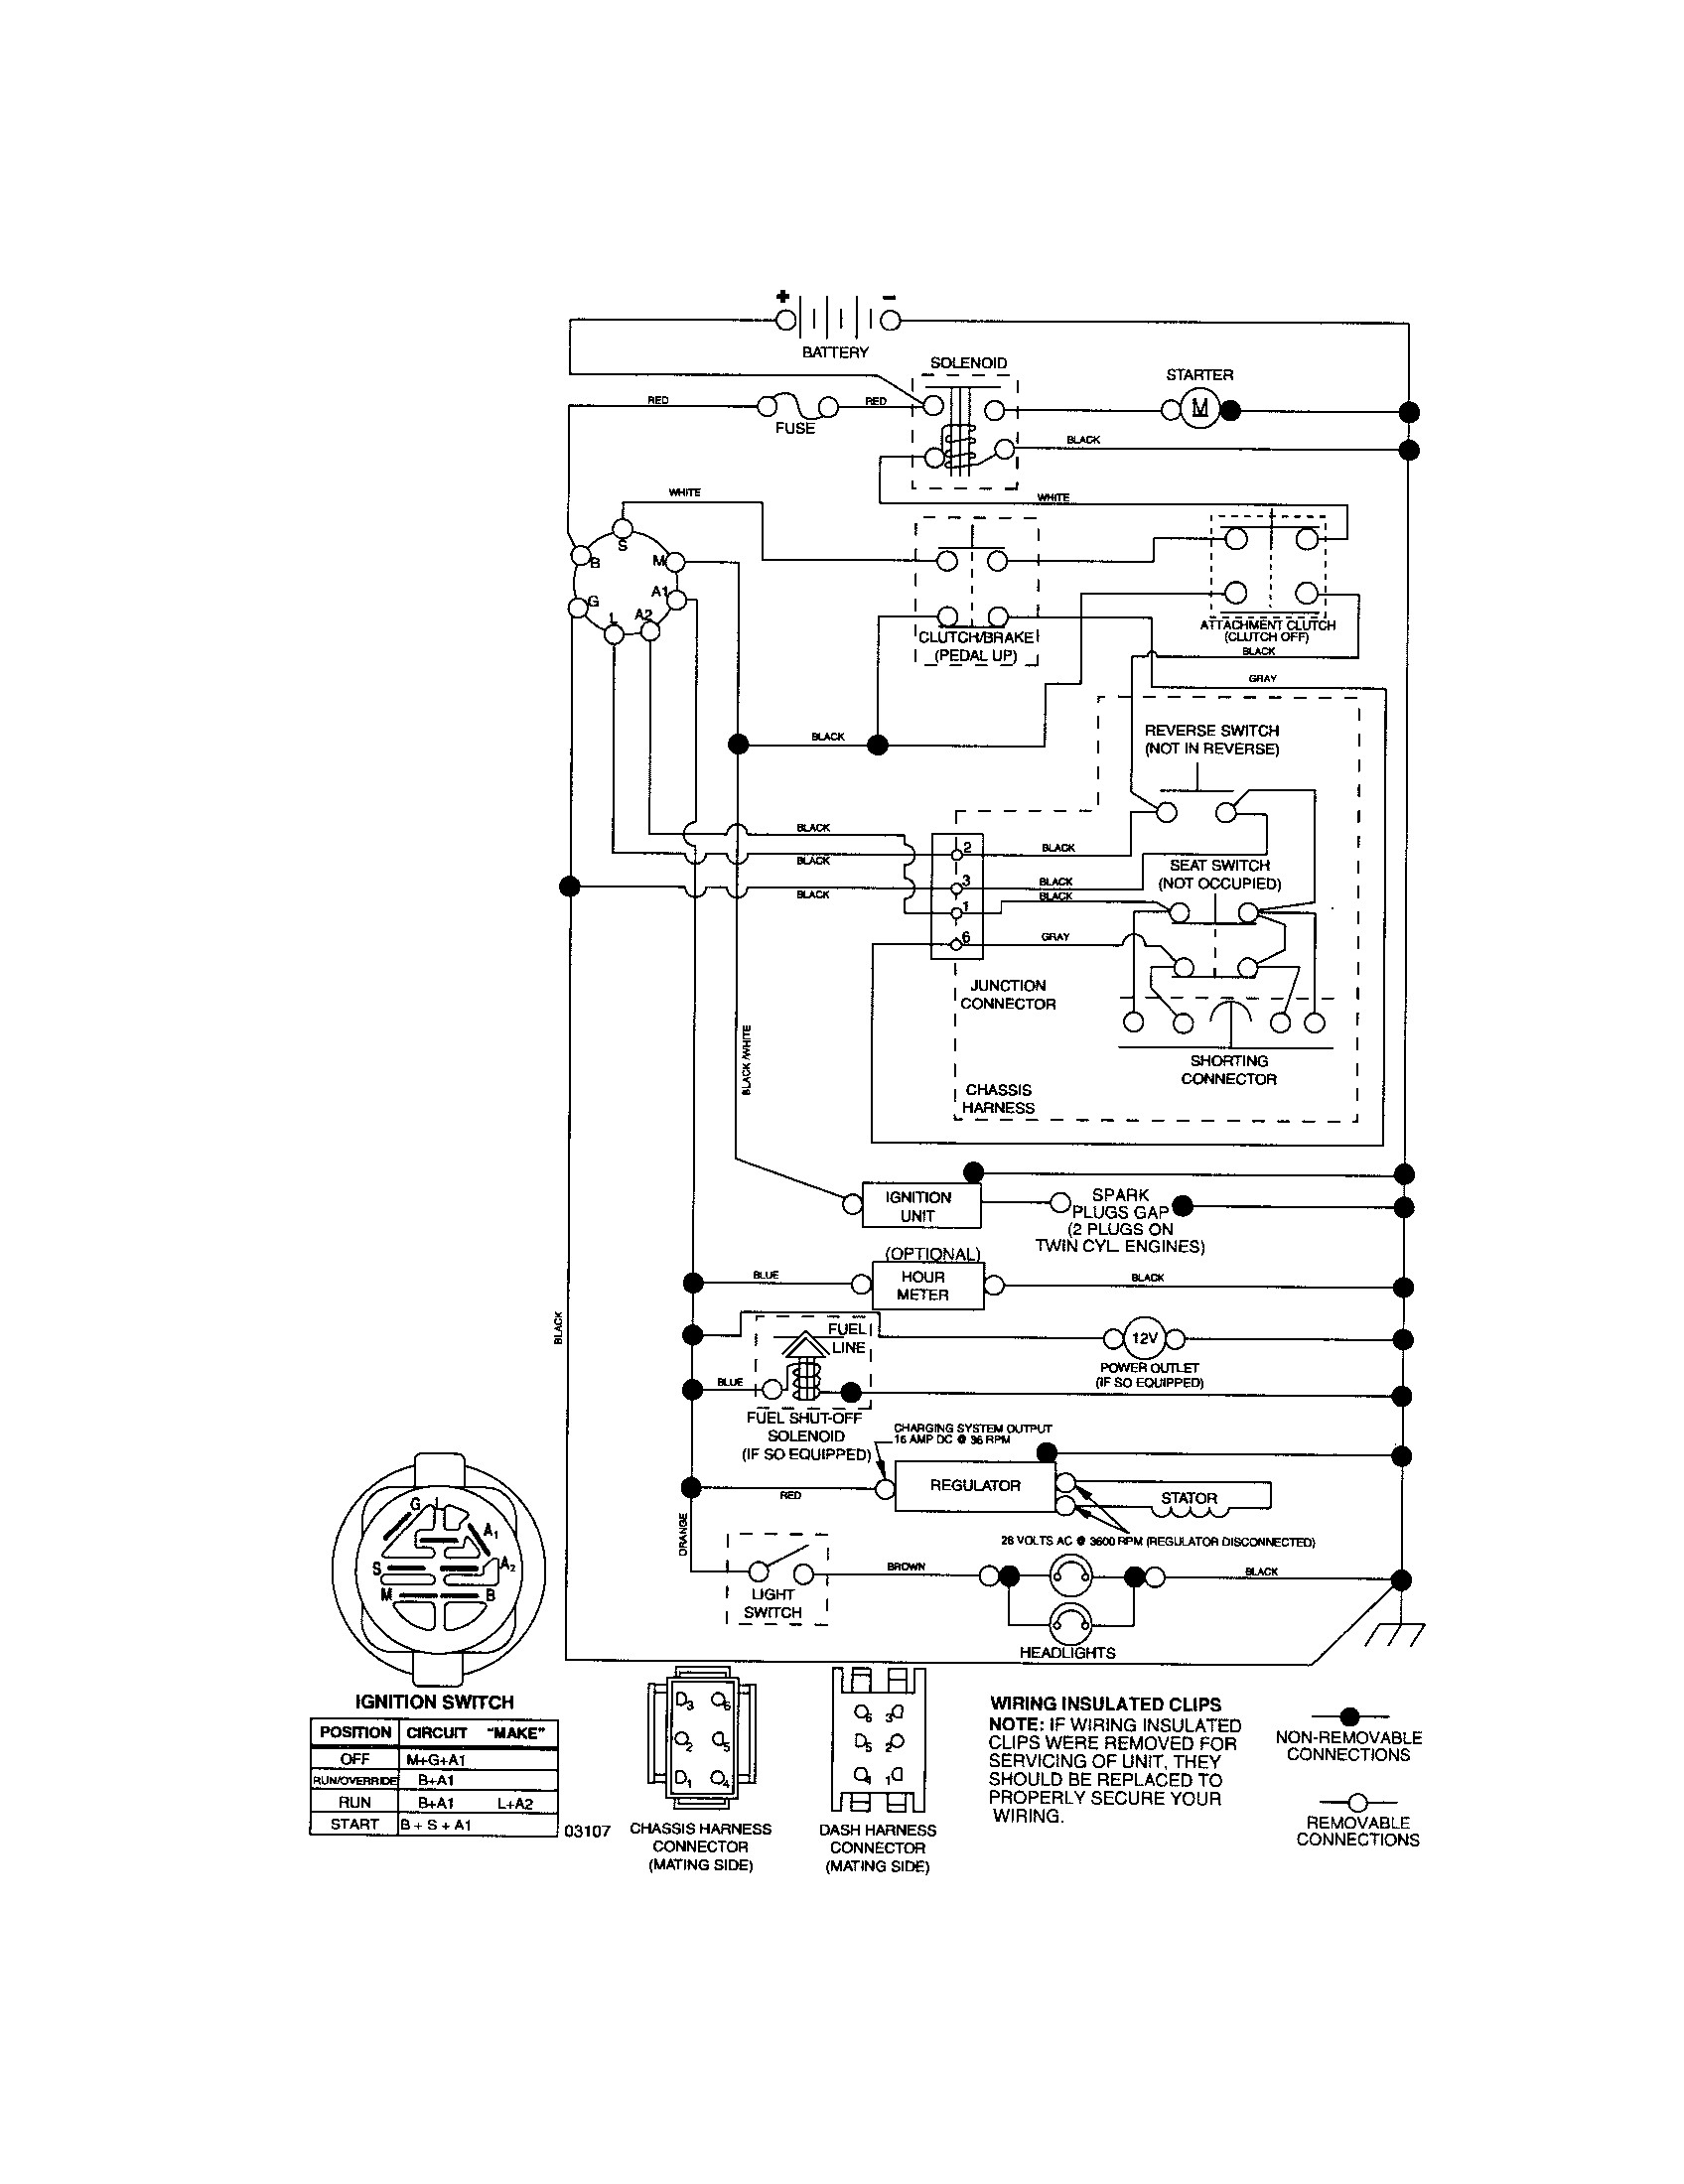 Small Engine Wiring Diagram Murray Wiring Schematics Of Small Engine Wiring Diagram